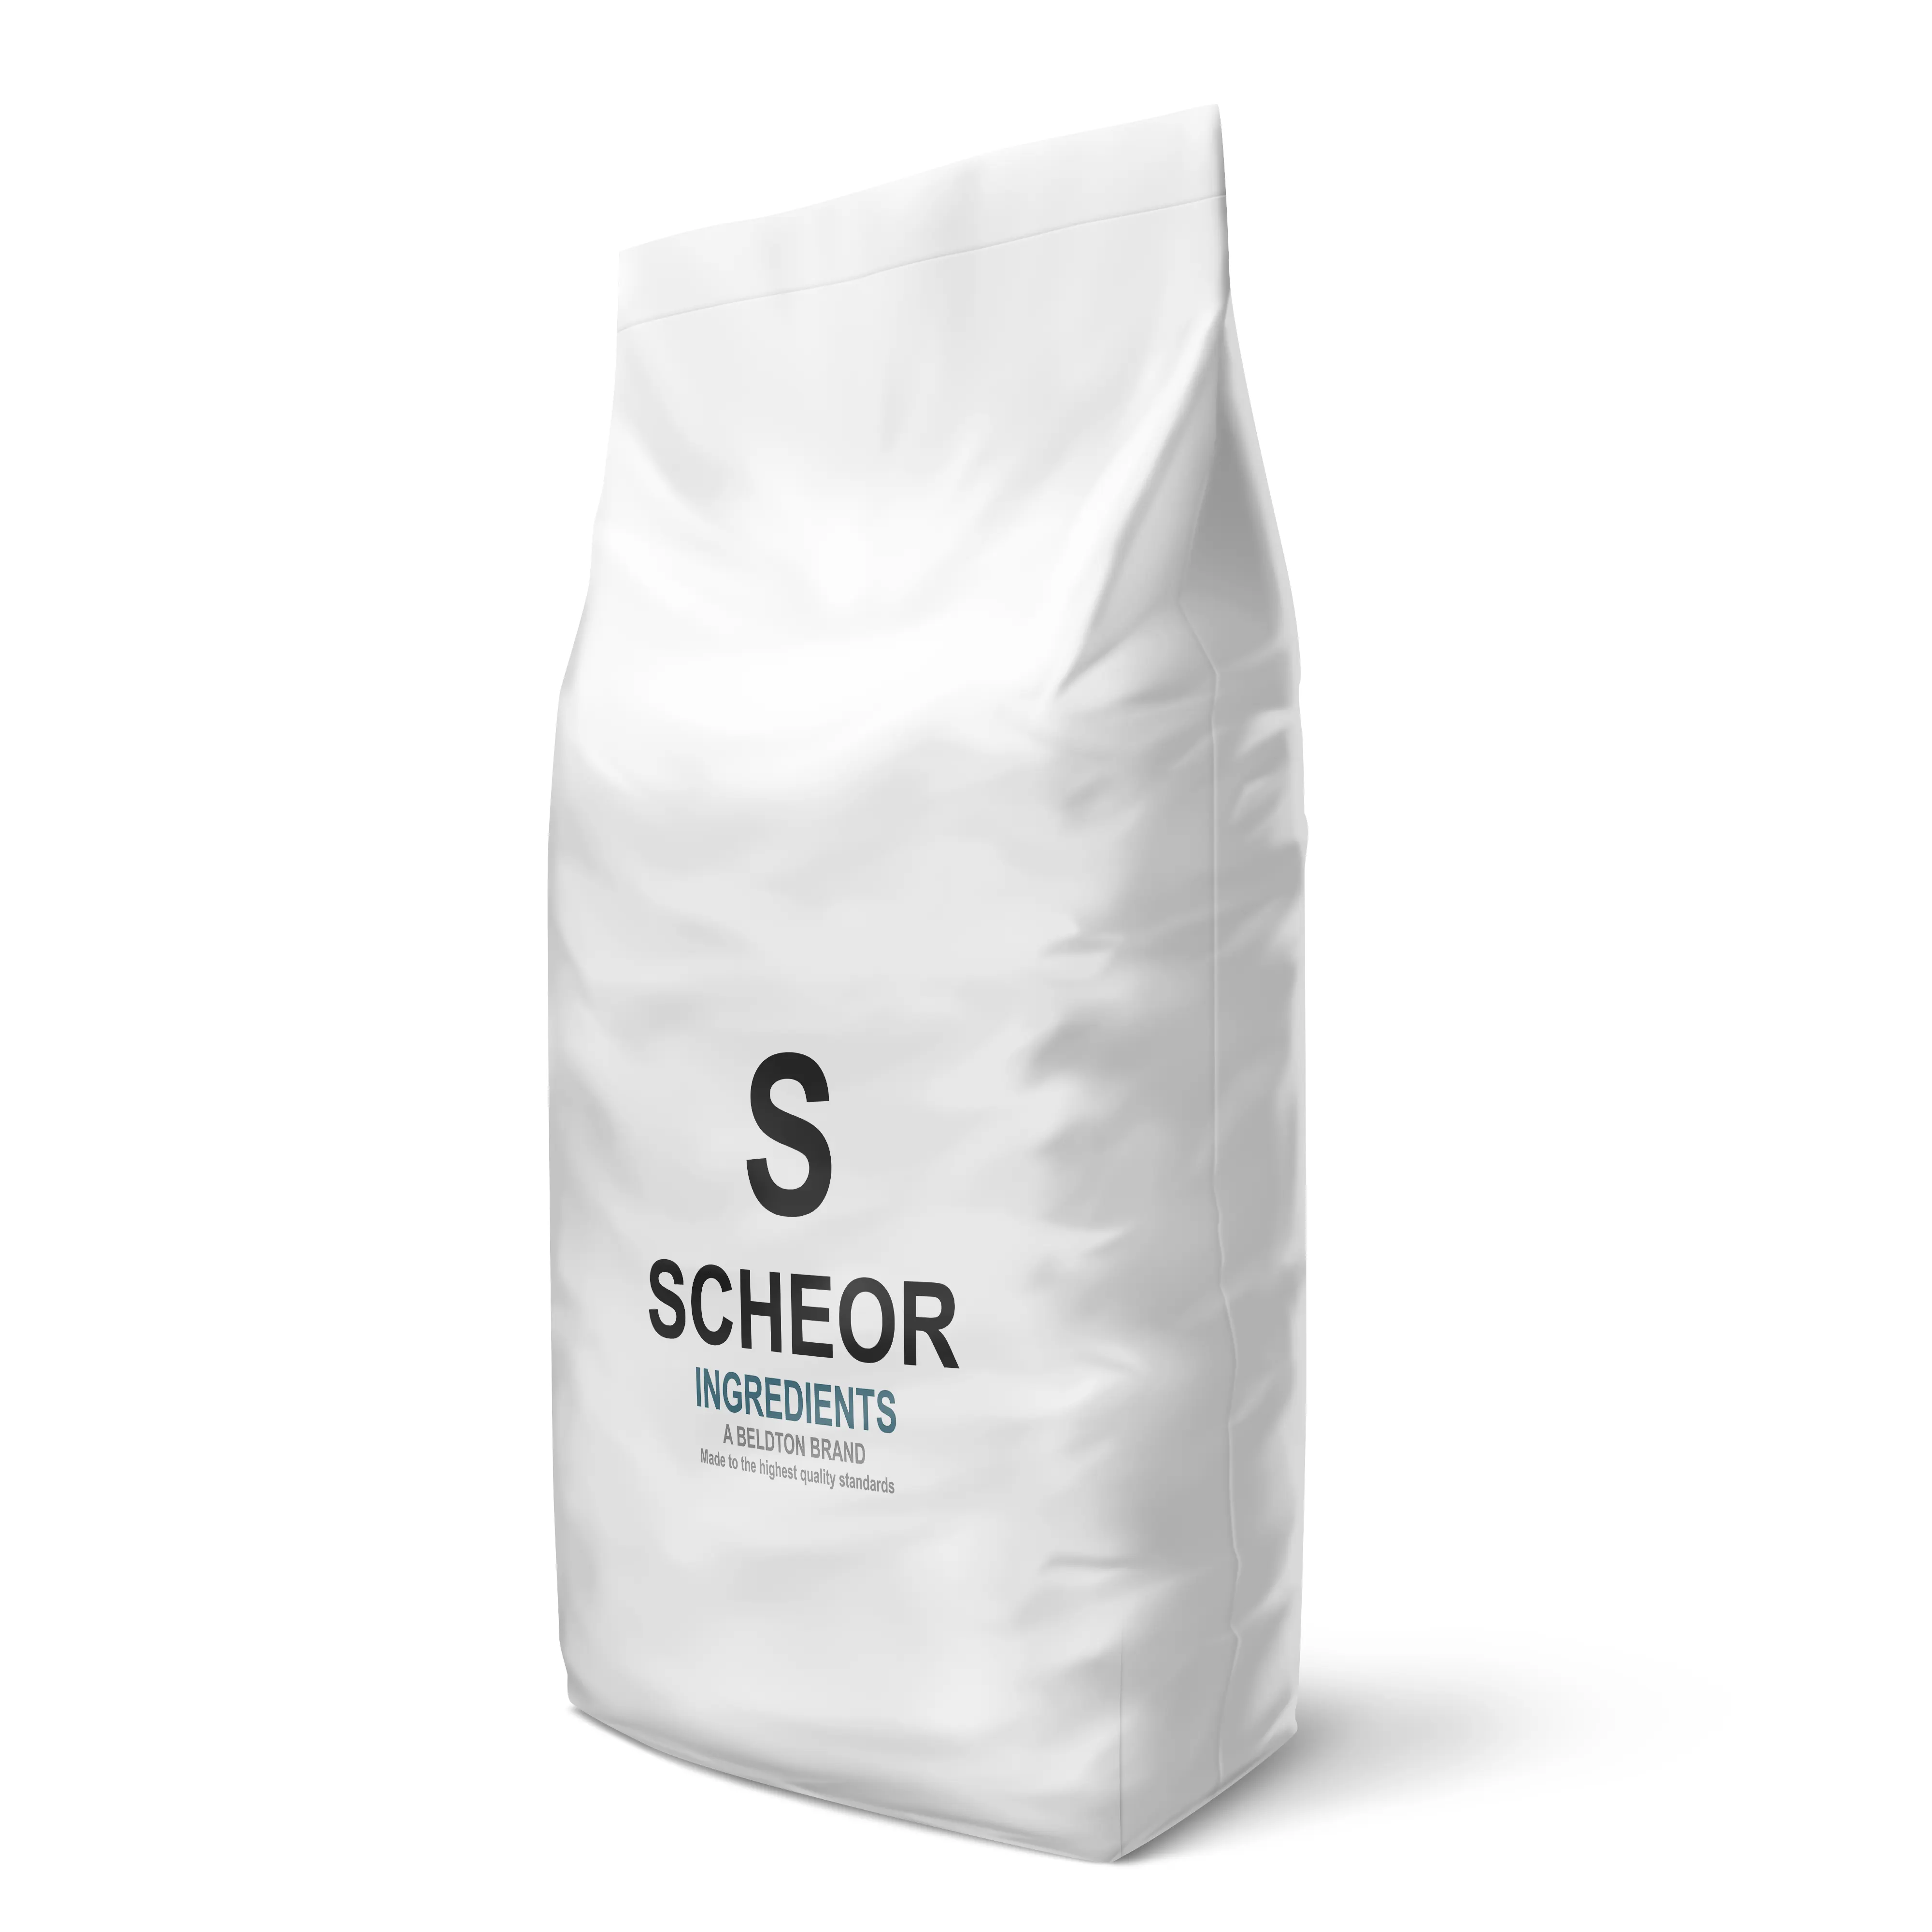 Scheor Sweet Whey Powder 25kg Bulk Bag - Food Ingredients - (ISO, HACCP, ORGANIC, HALAL)